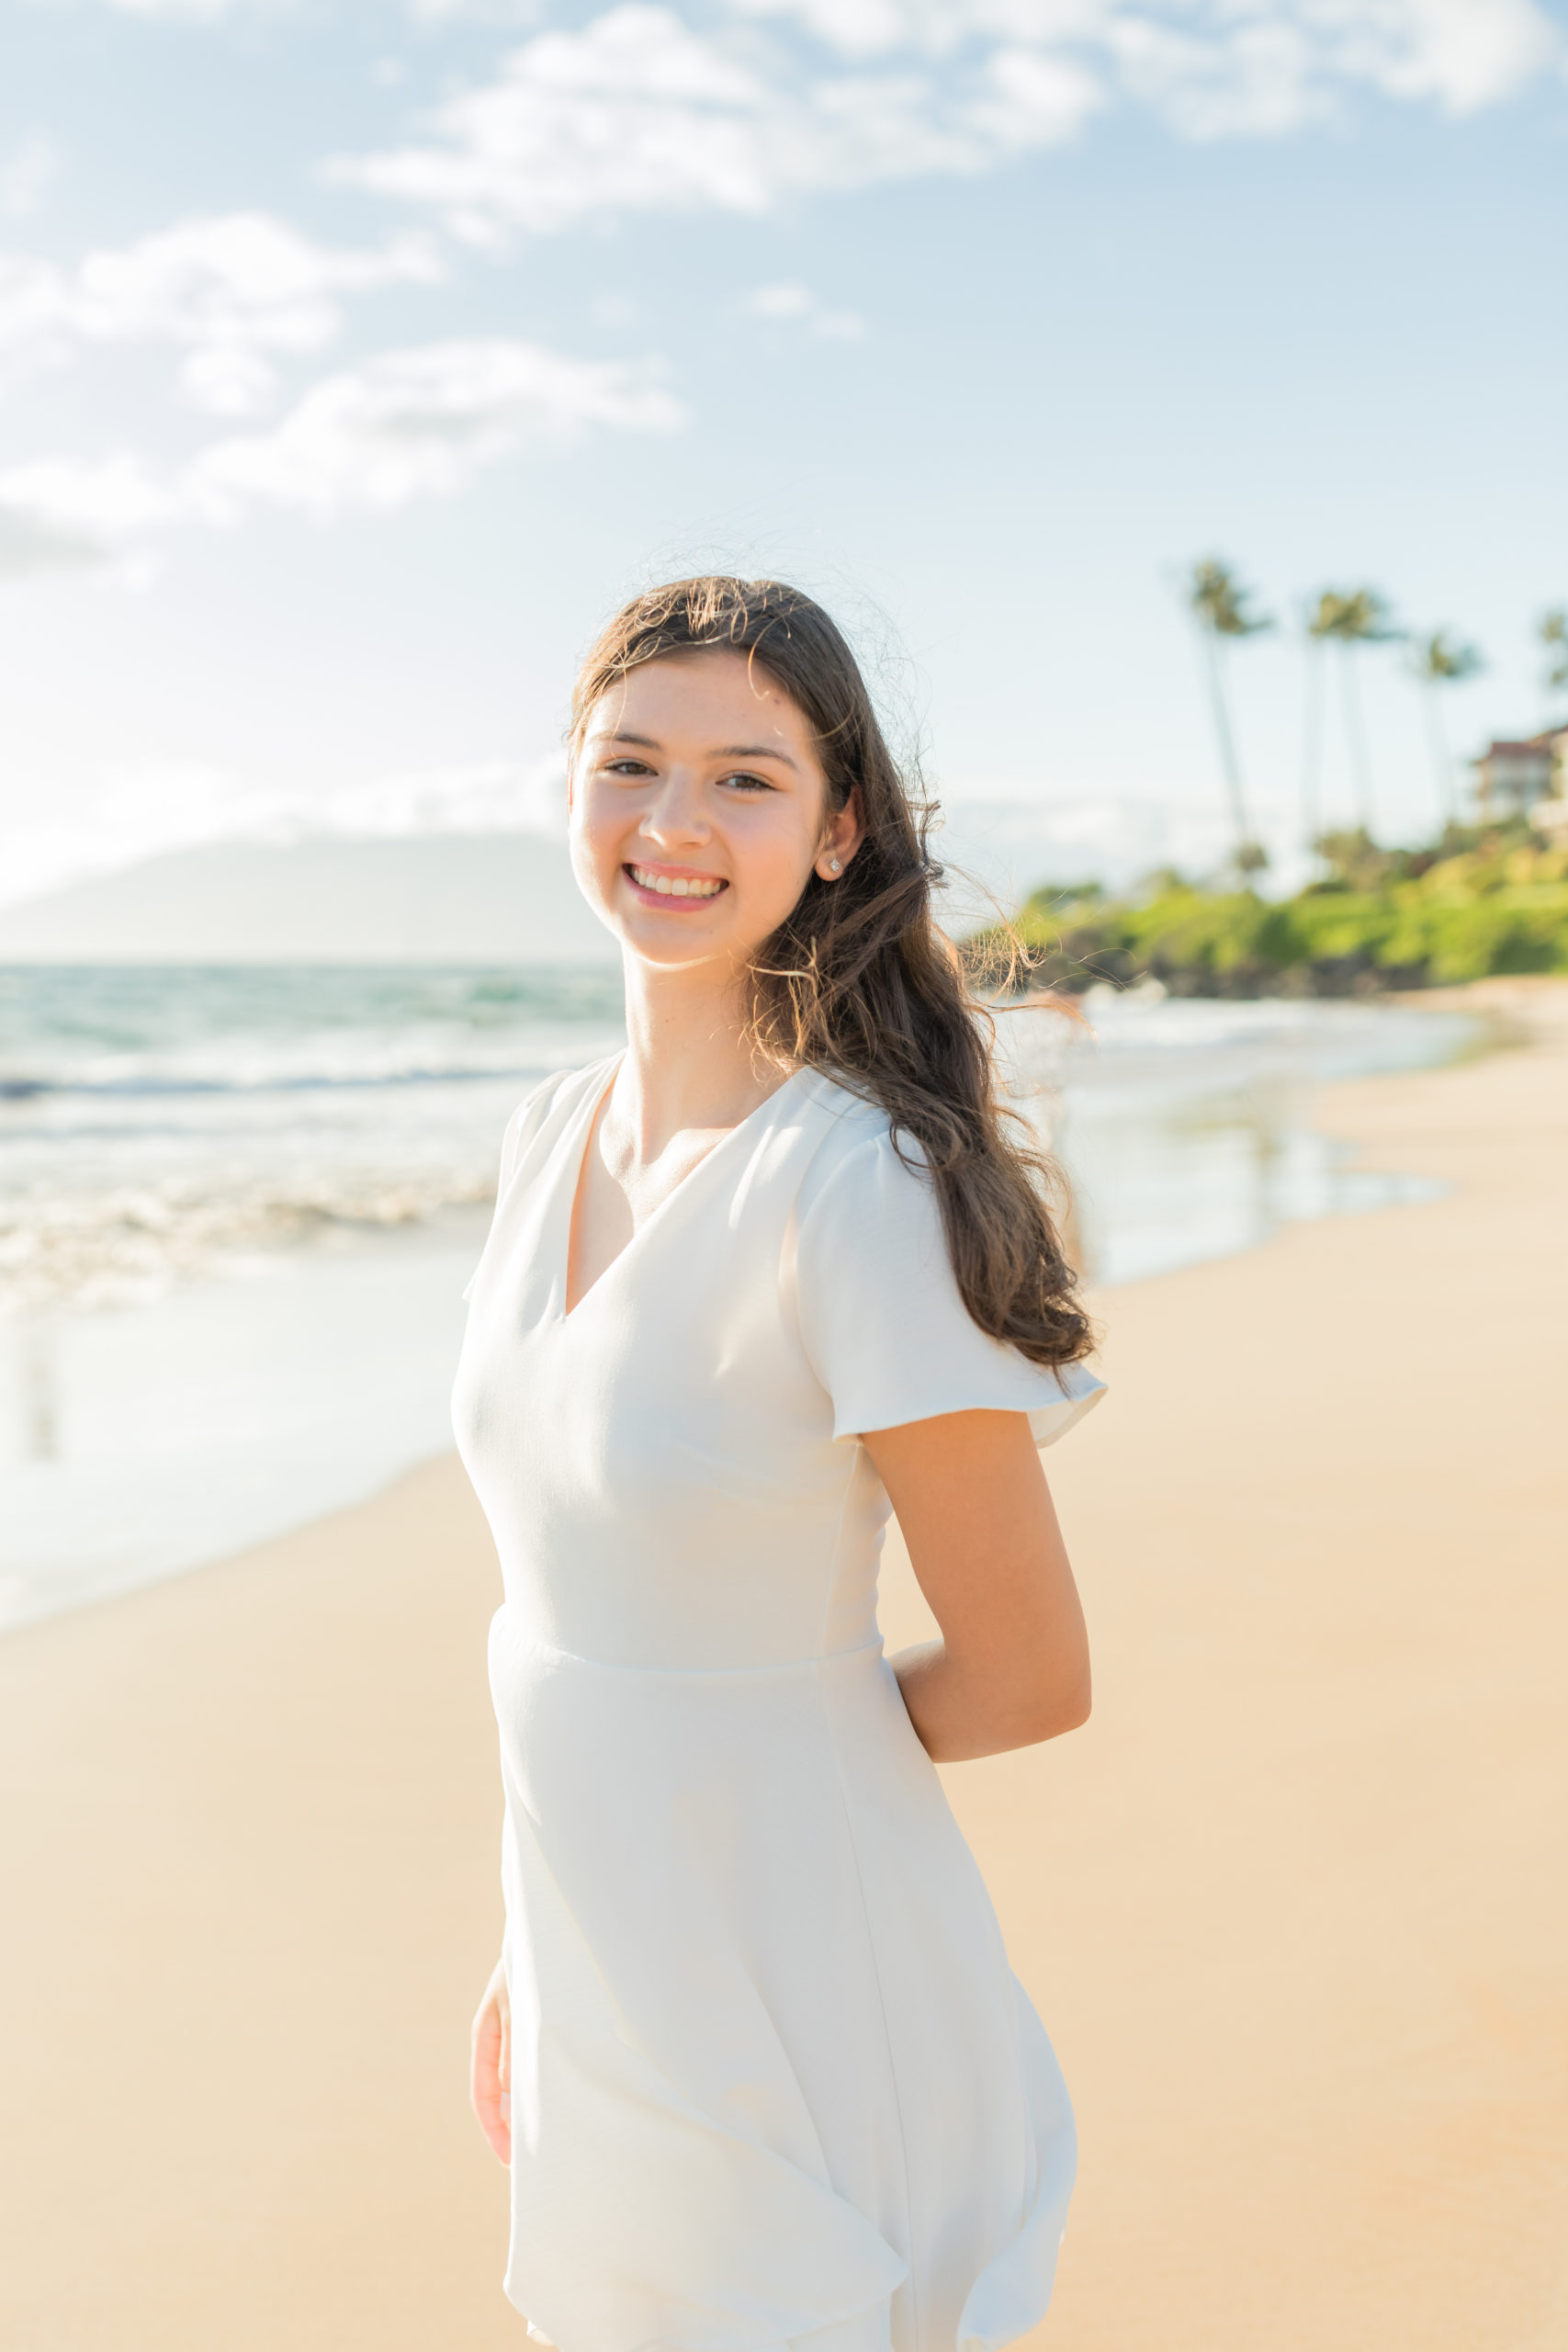 Maui Beach Portraits for seniors